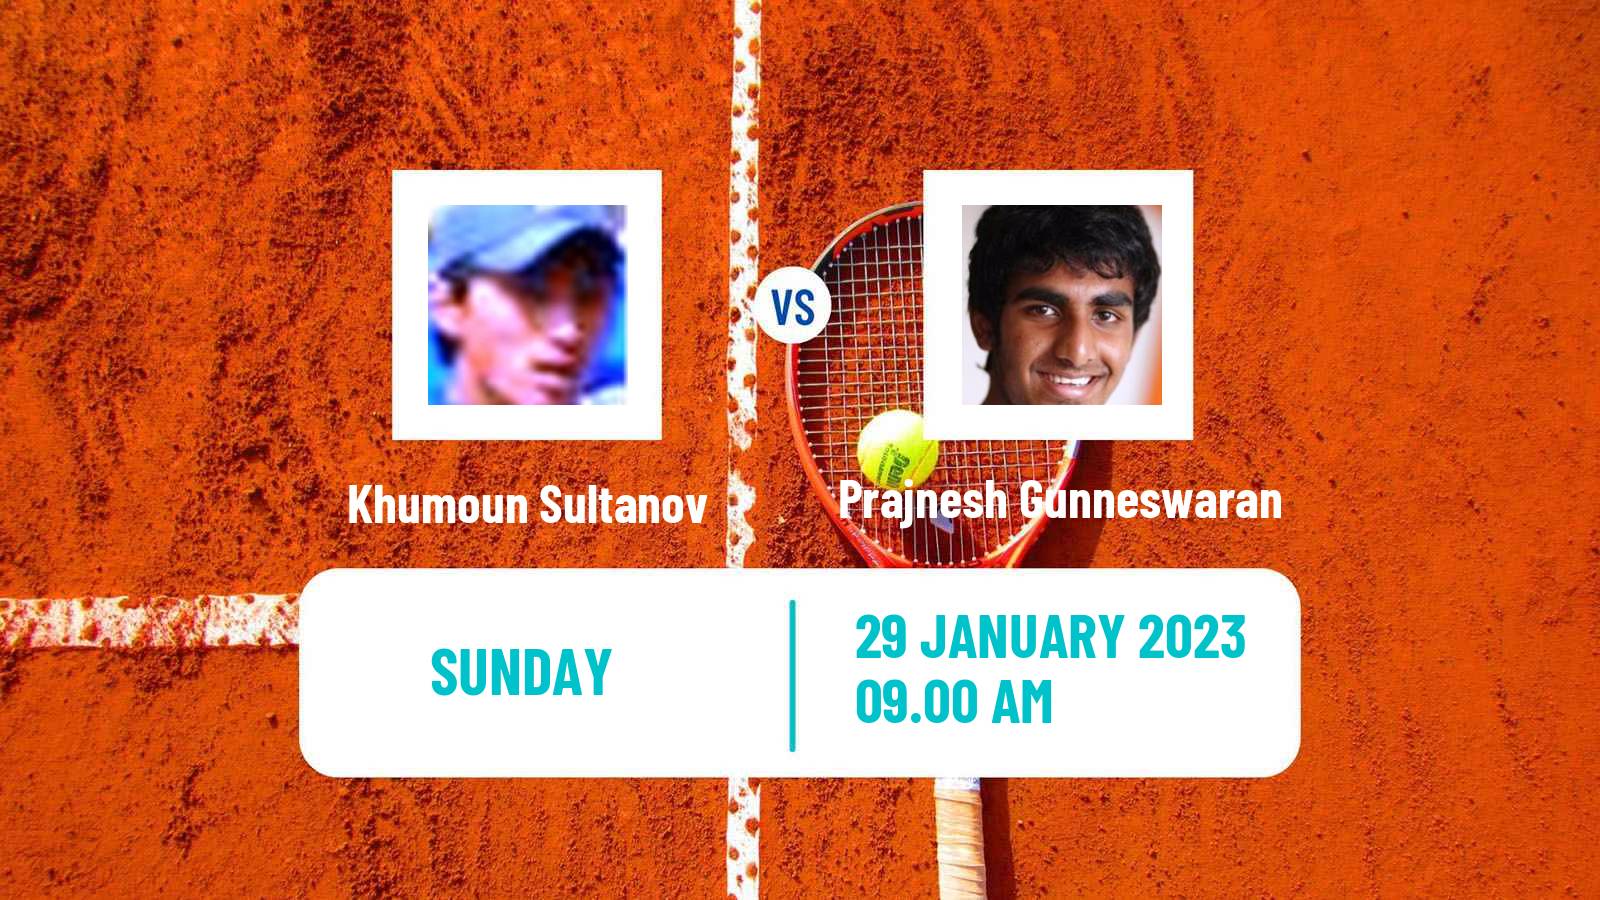 Tennis ITF Tournaments Khumoun Sultanov - Prajnesh Gunneswaran